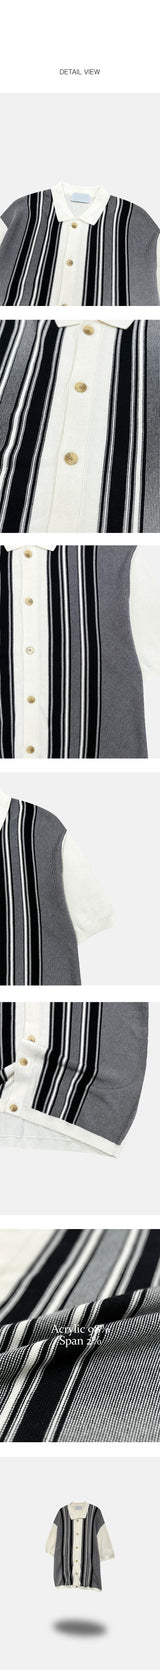 [S/S] Geek stripe kara half cardigan(3color)